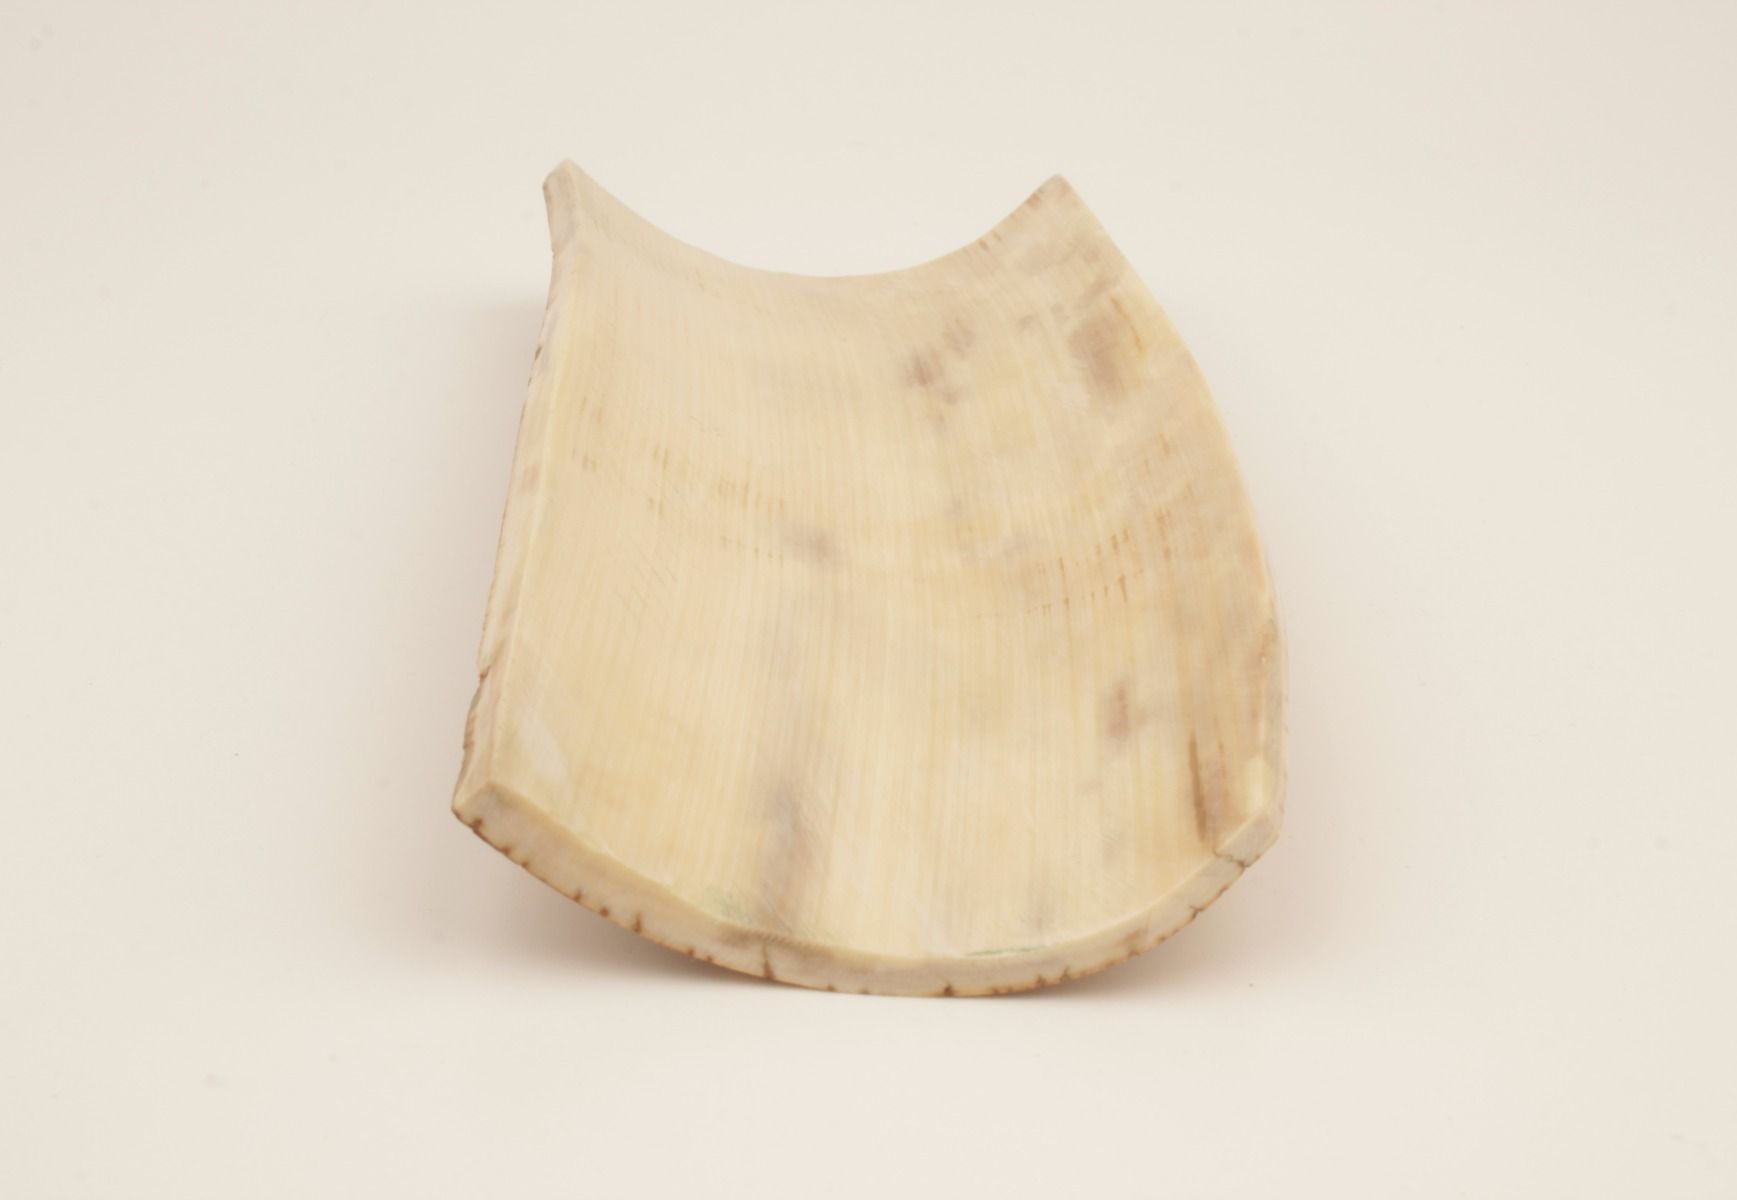 Beige-caramel mammoth bark